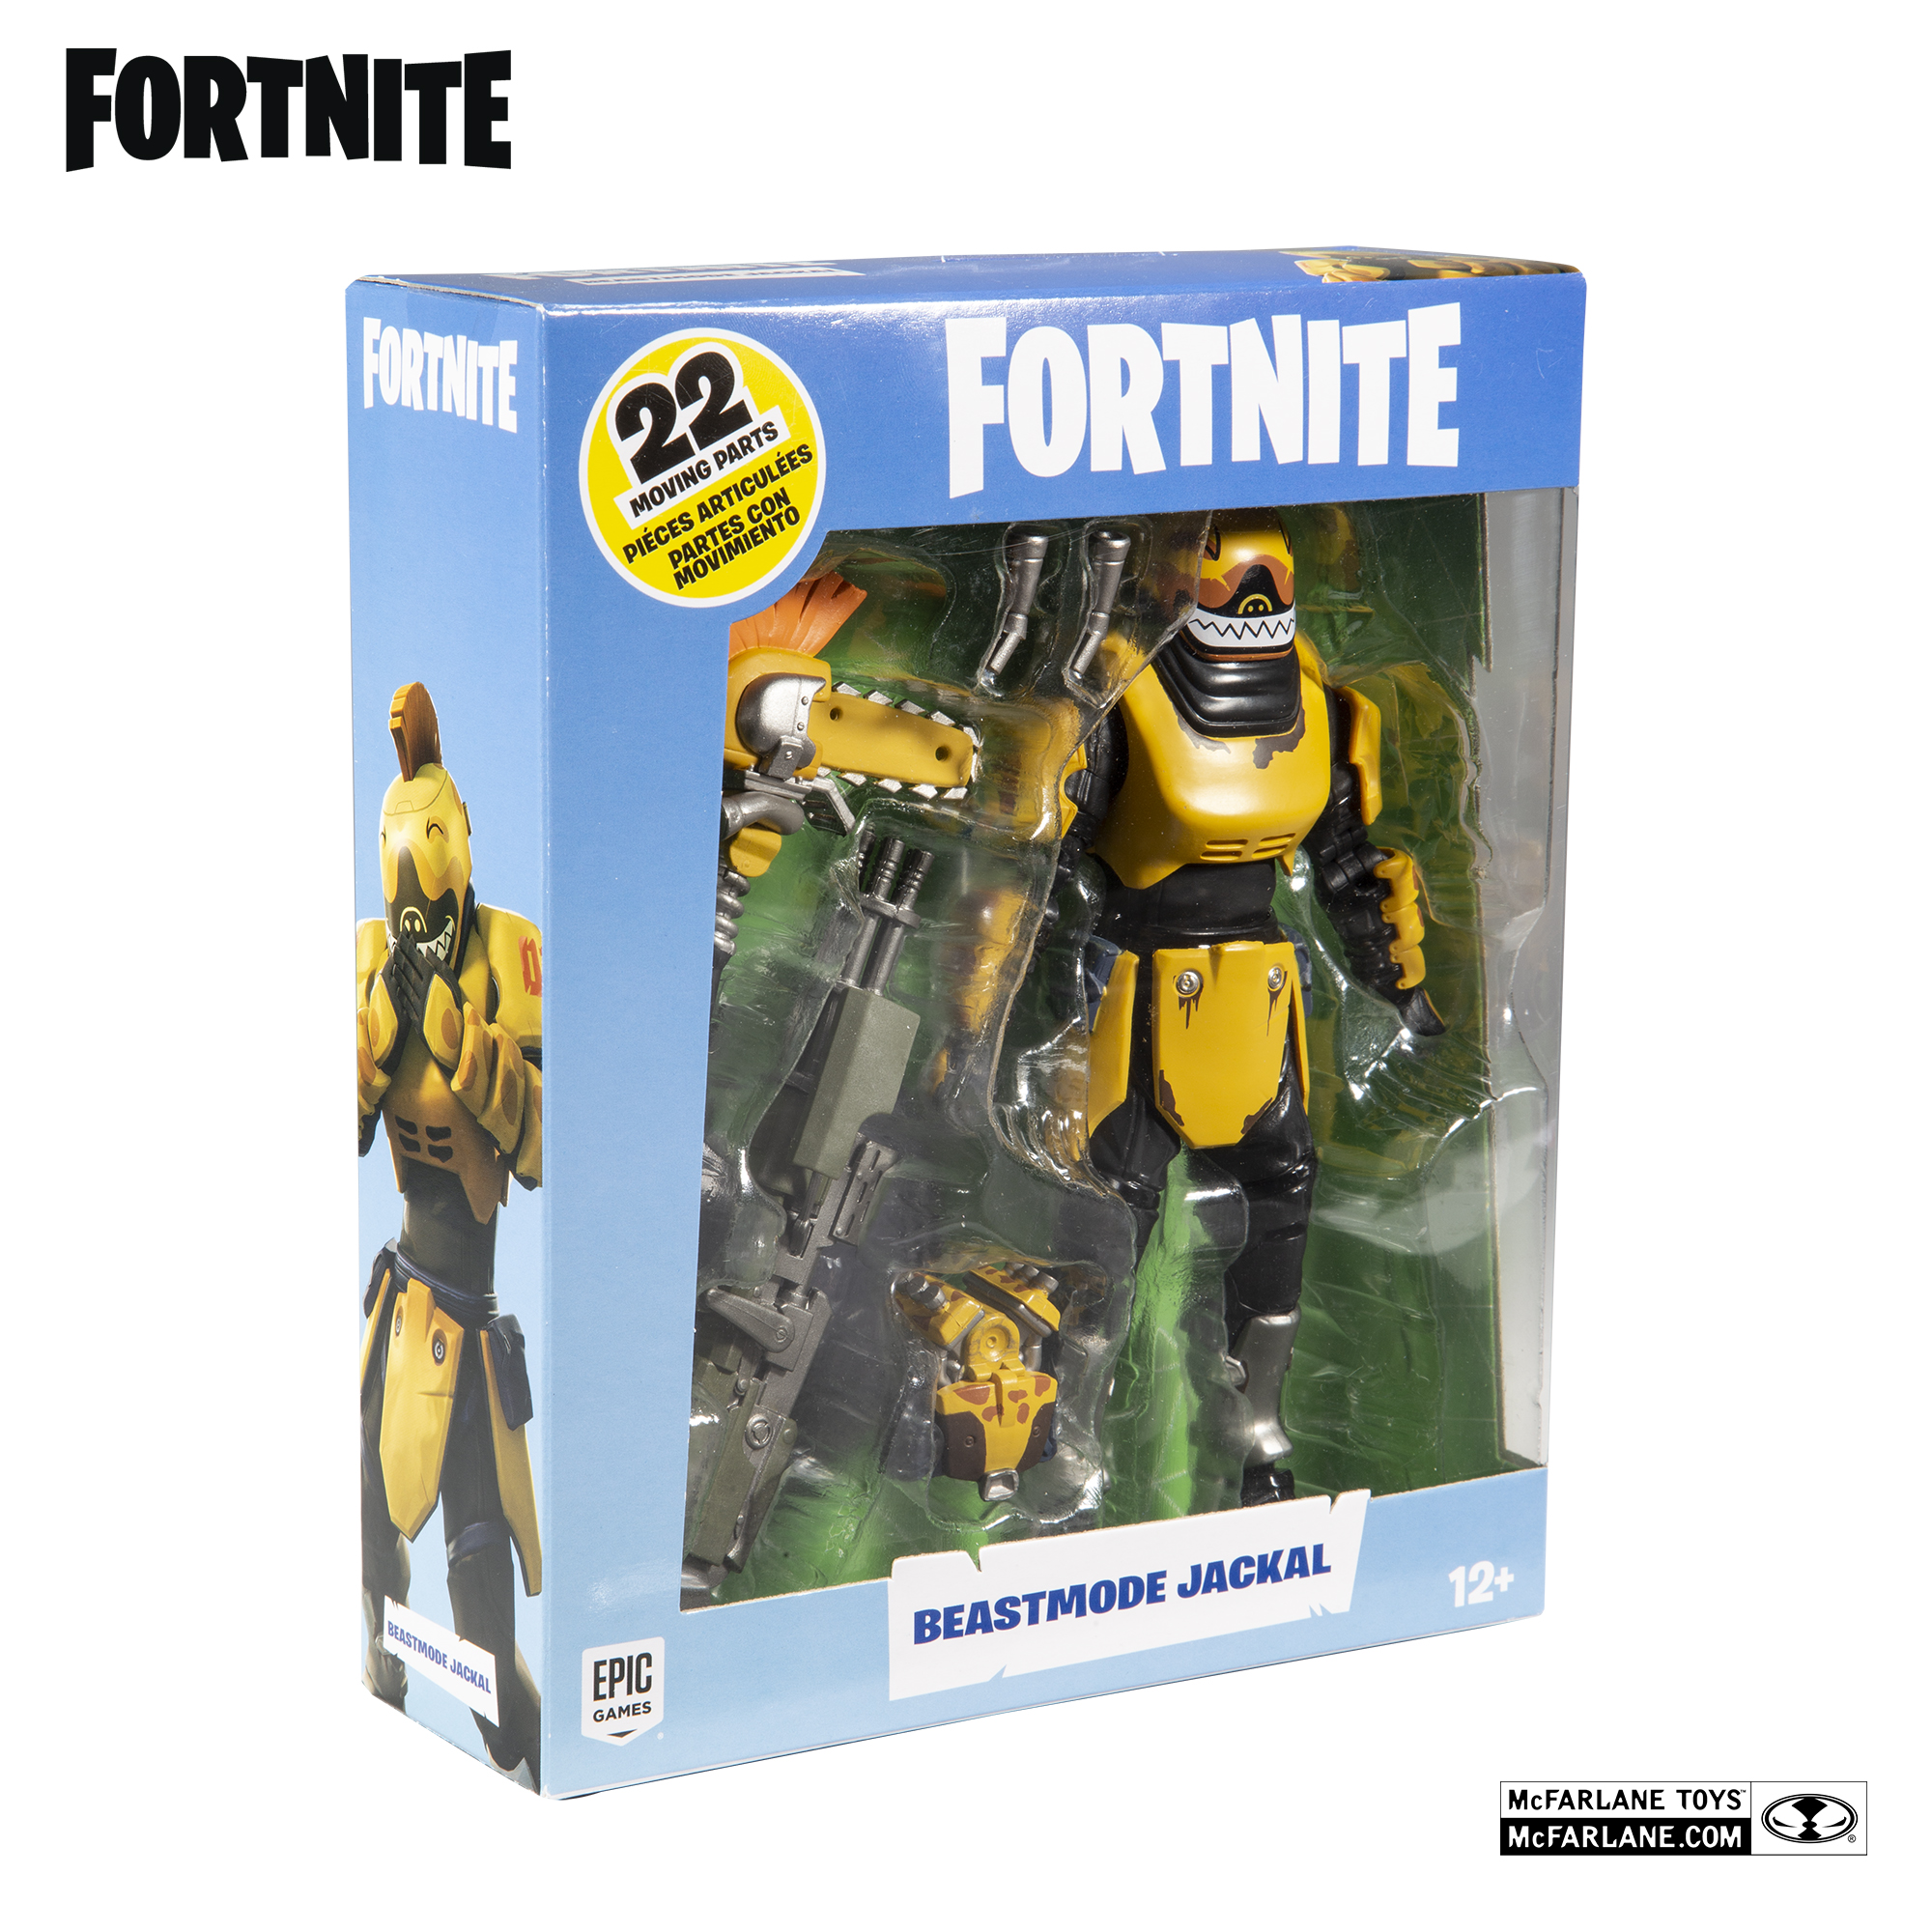 McFarlane Toys Fortnite Beastmode Jackal 7 Inch Action Figure MISB for sale online